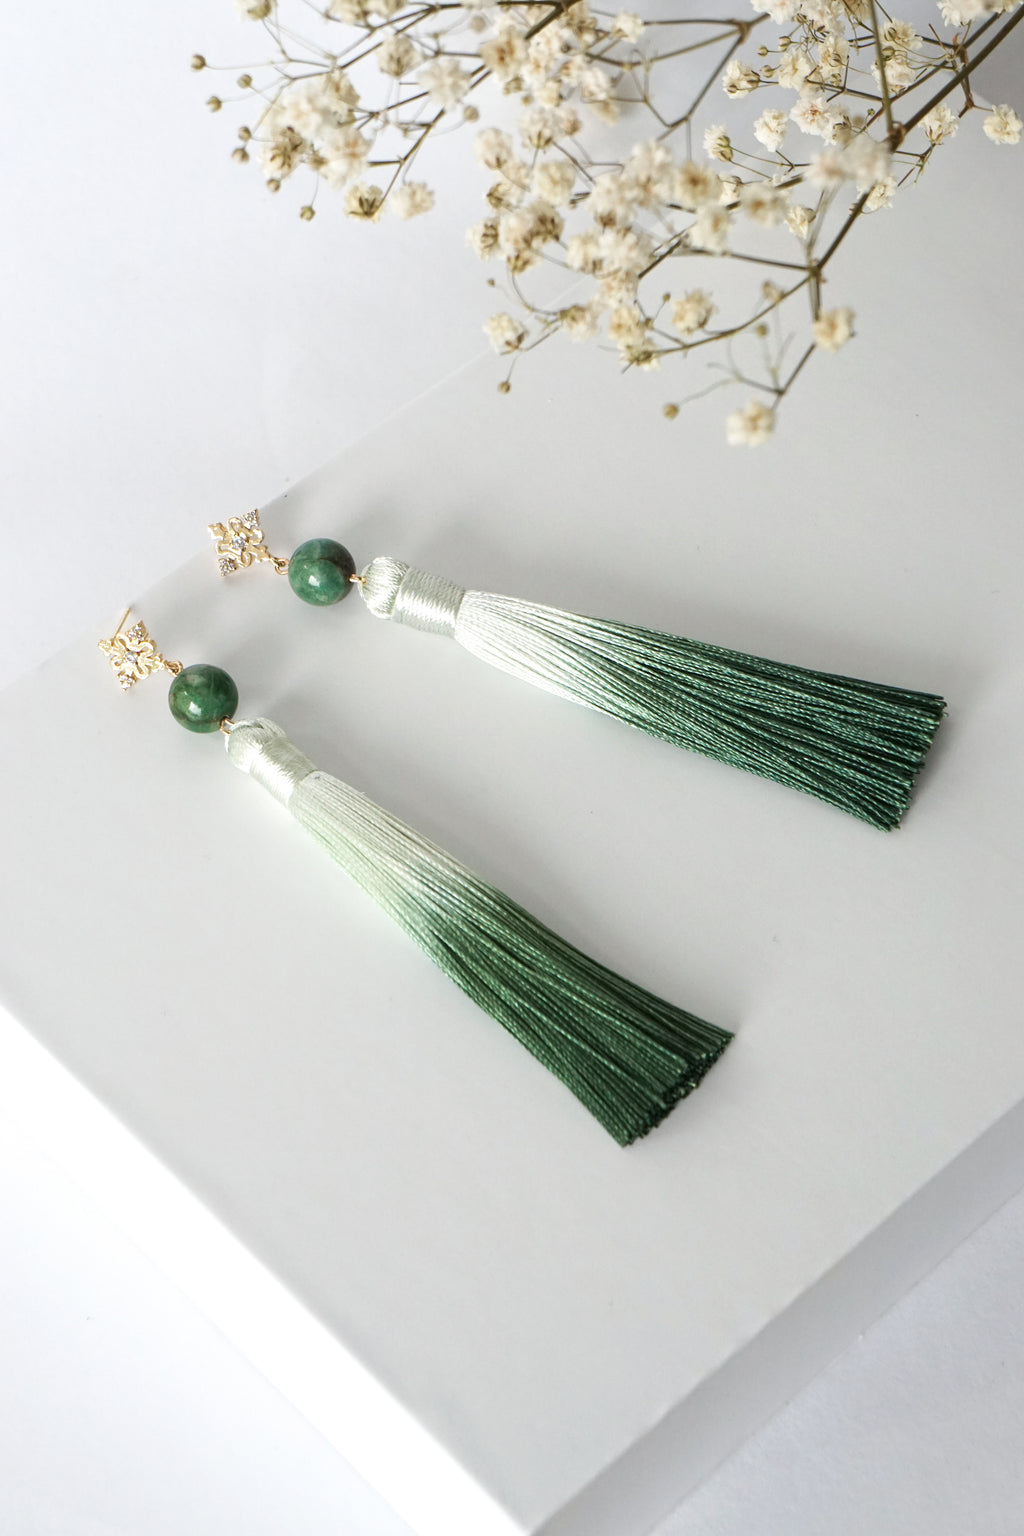 Chinoise Earrings - African Jade